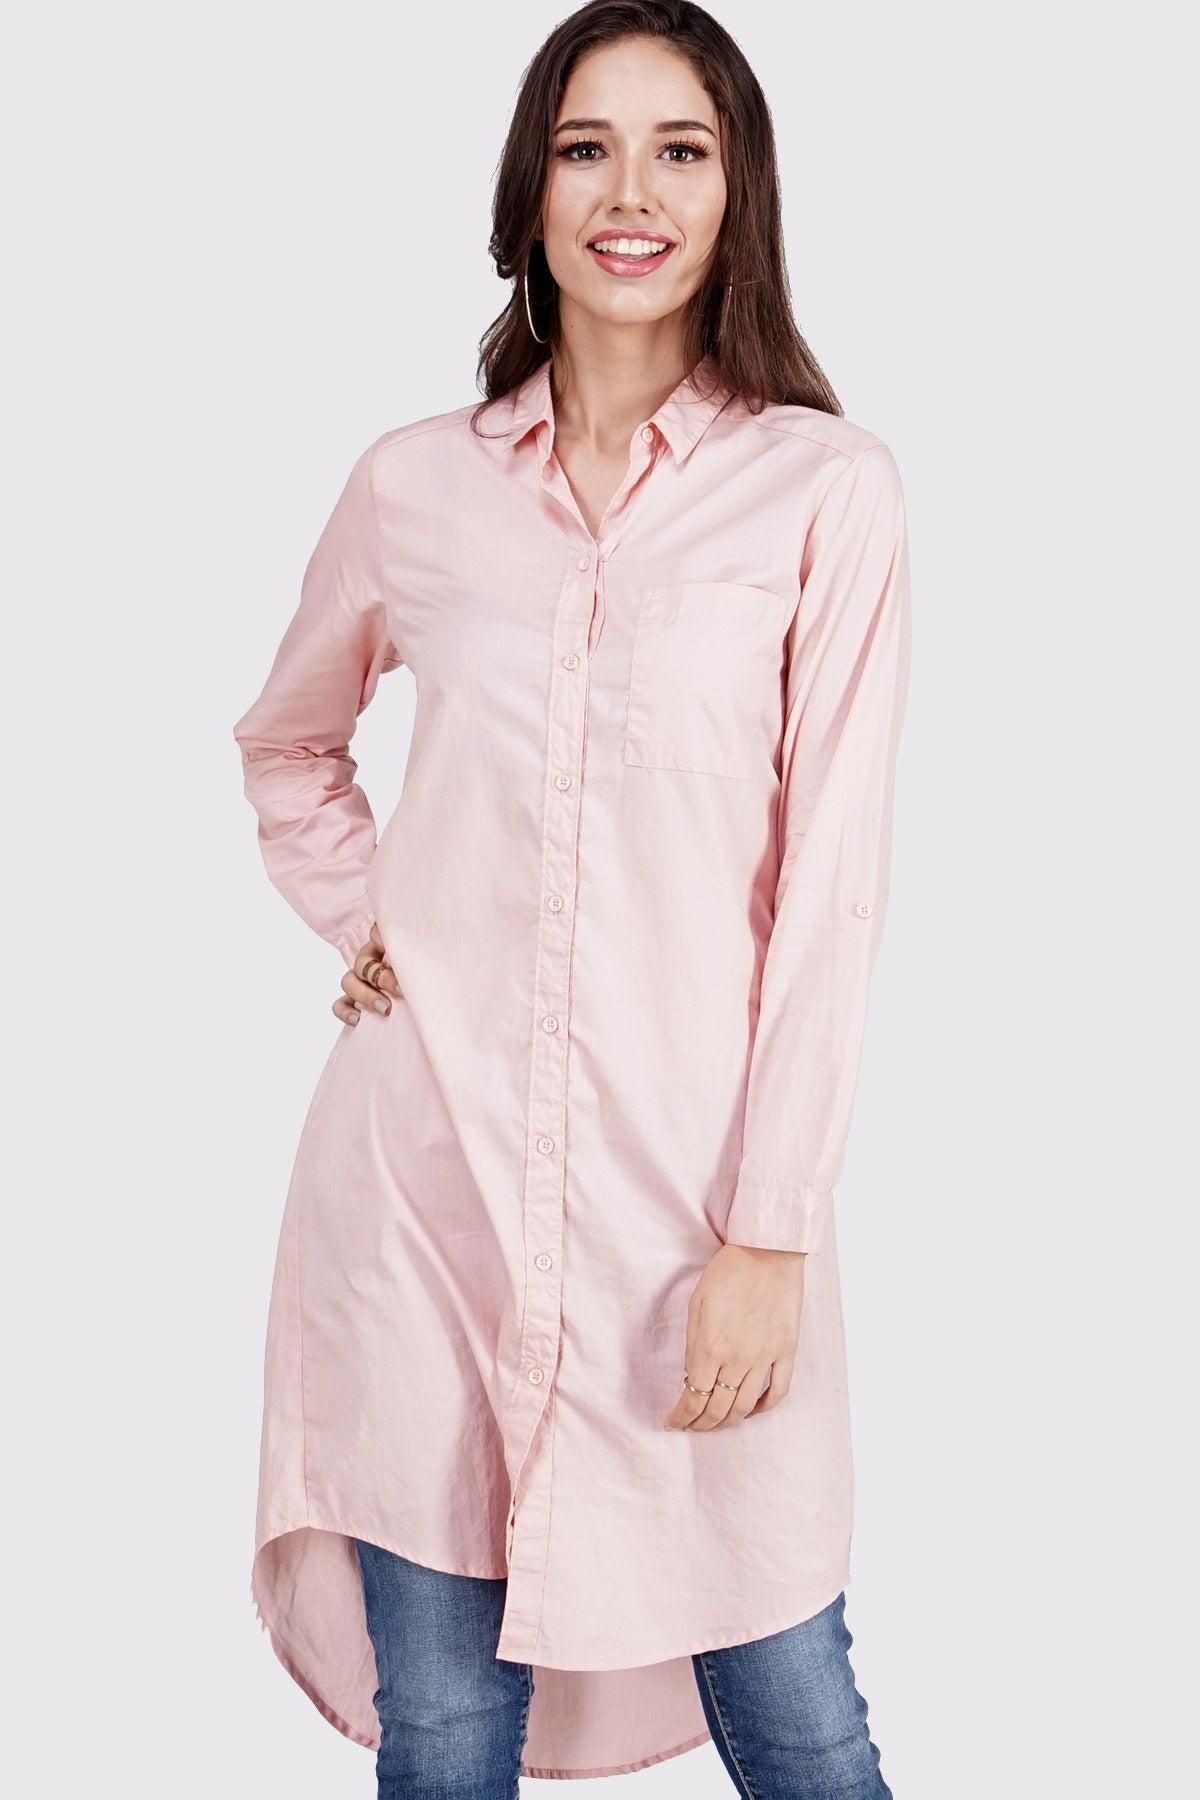 Dress Lengan Panjang Stea Pink Tunik